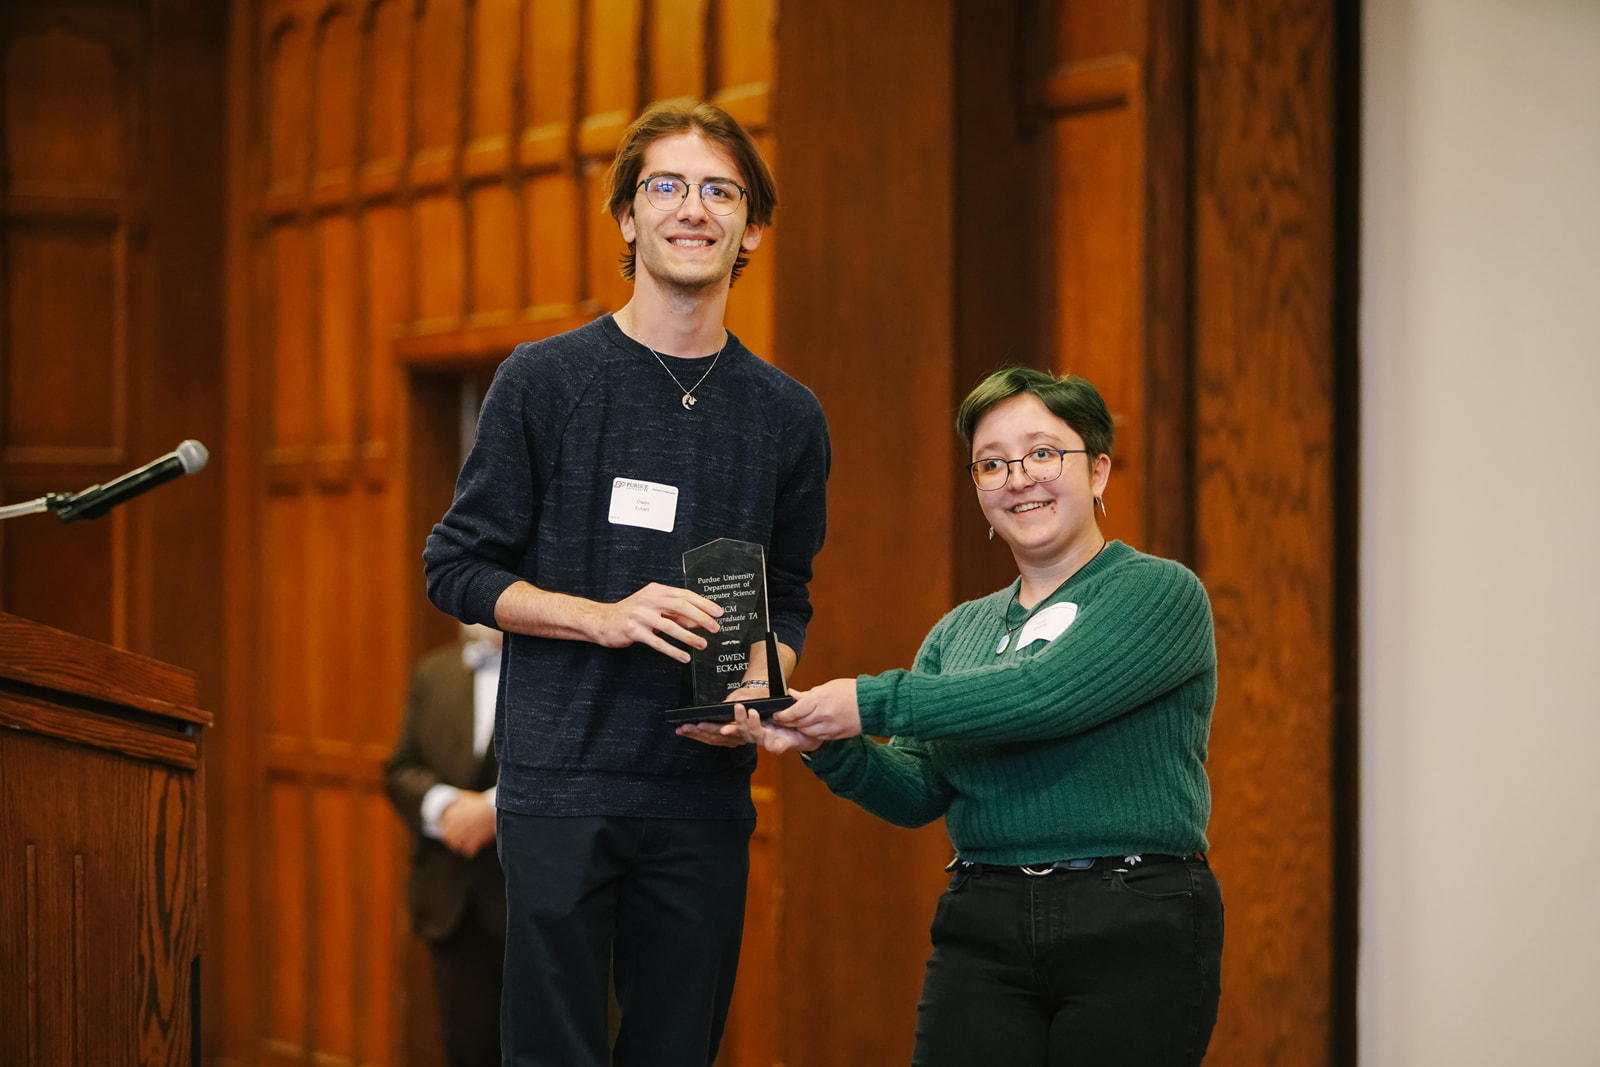 Owen Eckart won the ACM Undergraduate Teaching Assistant Award